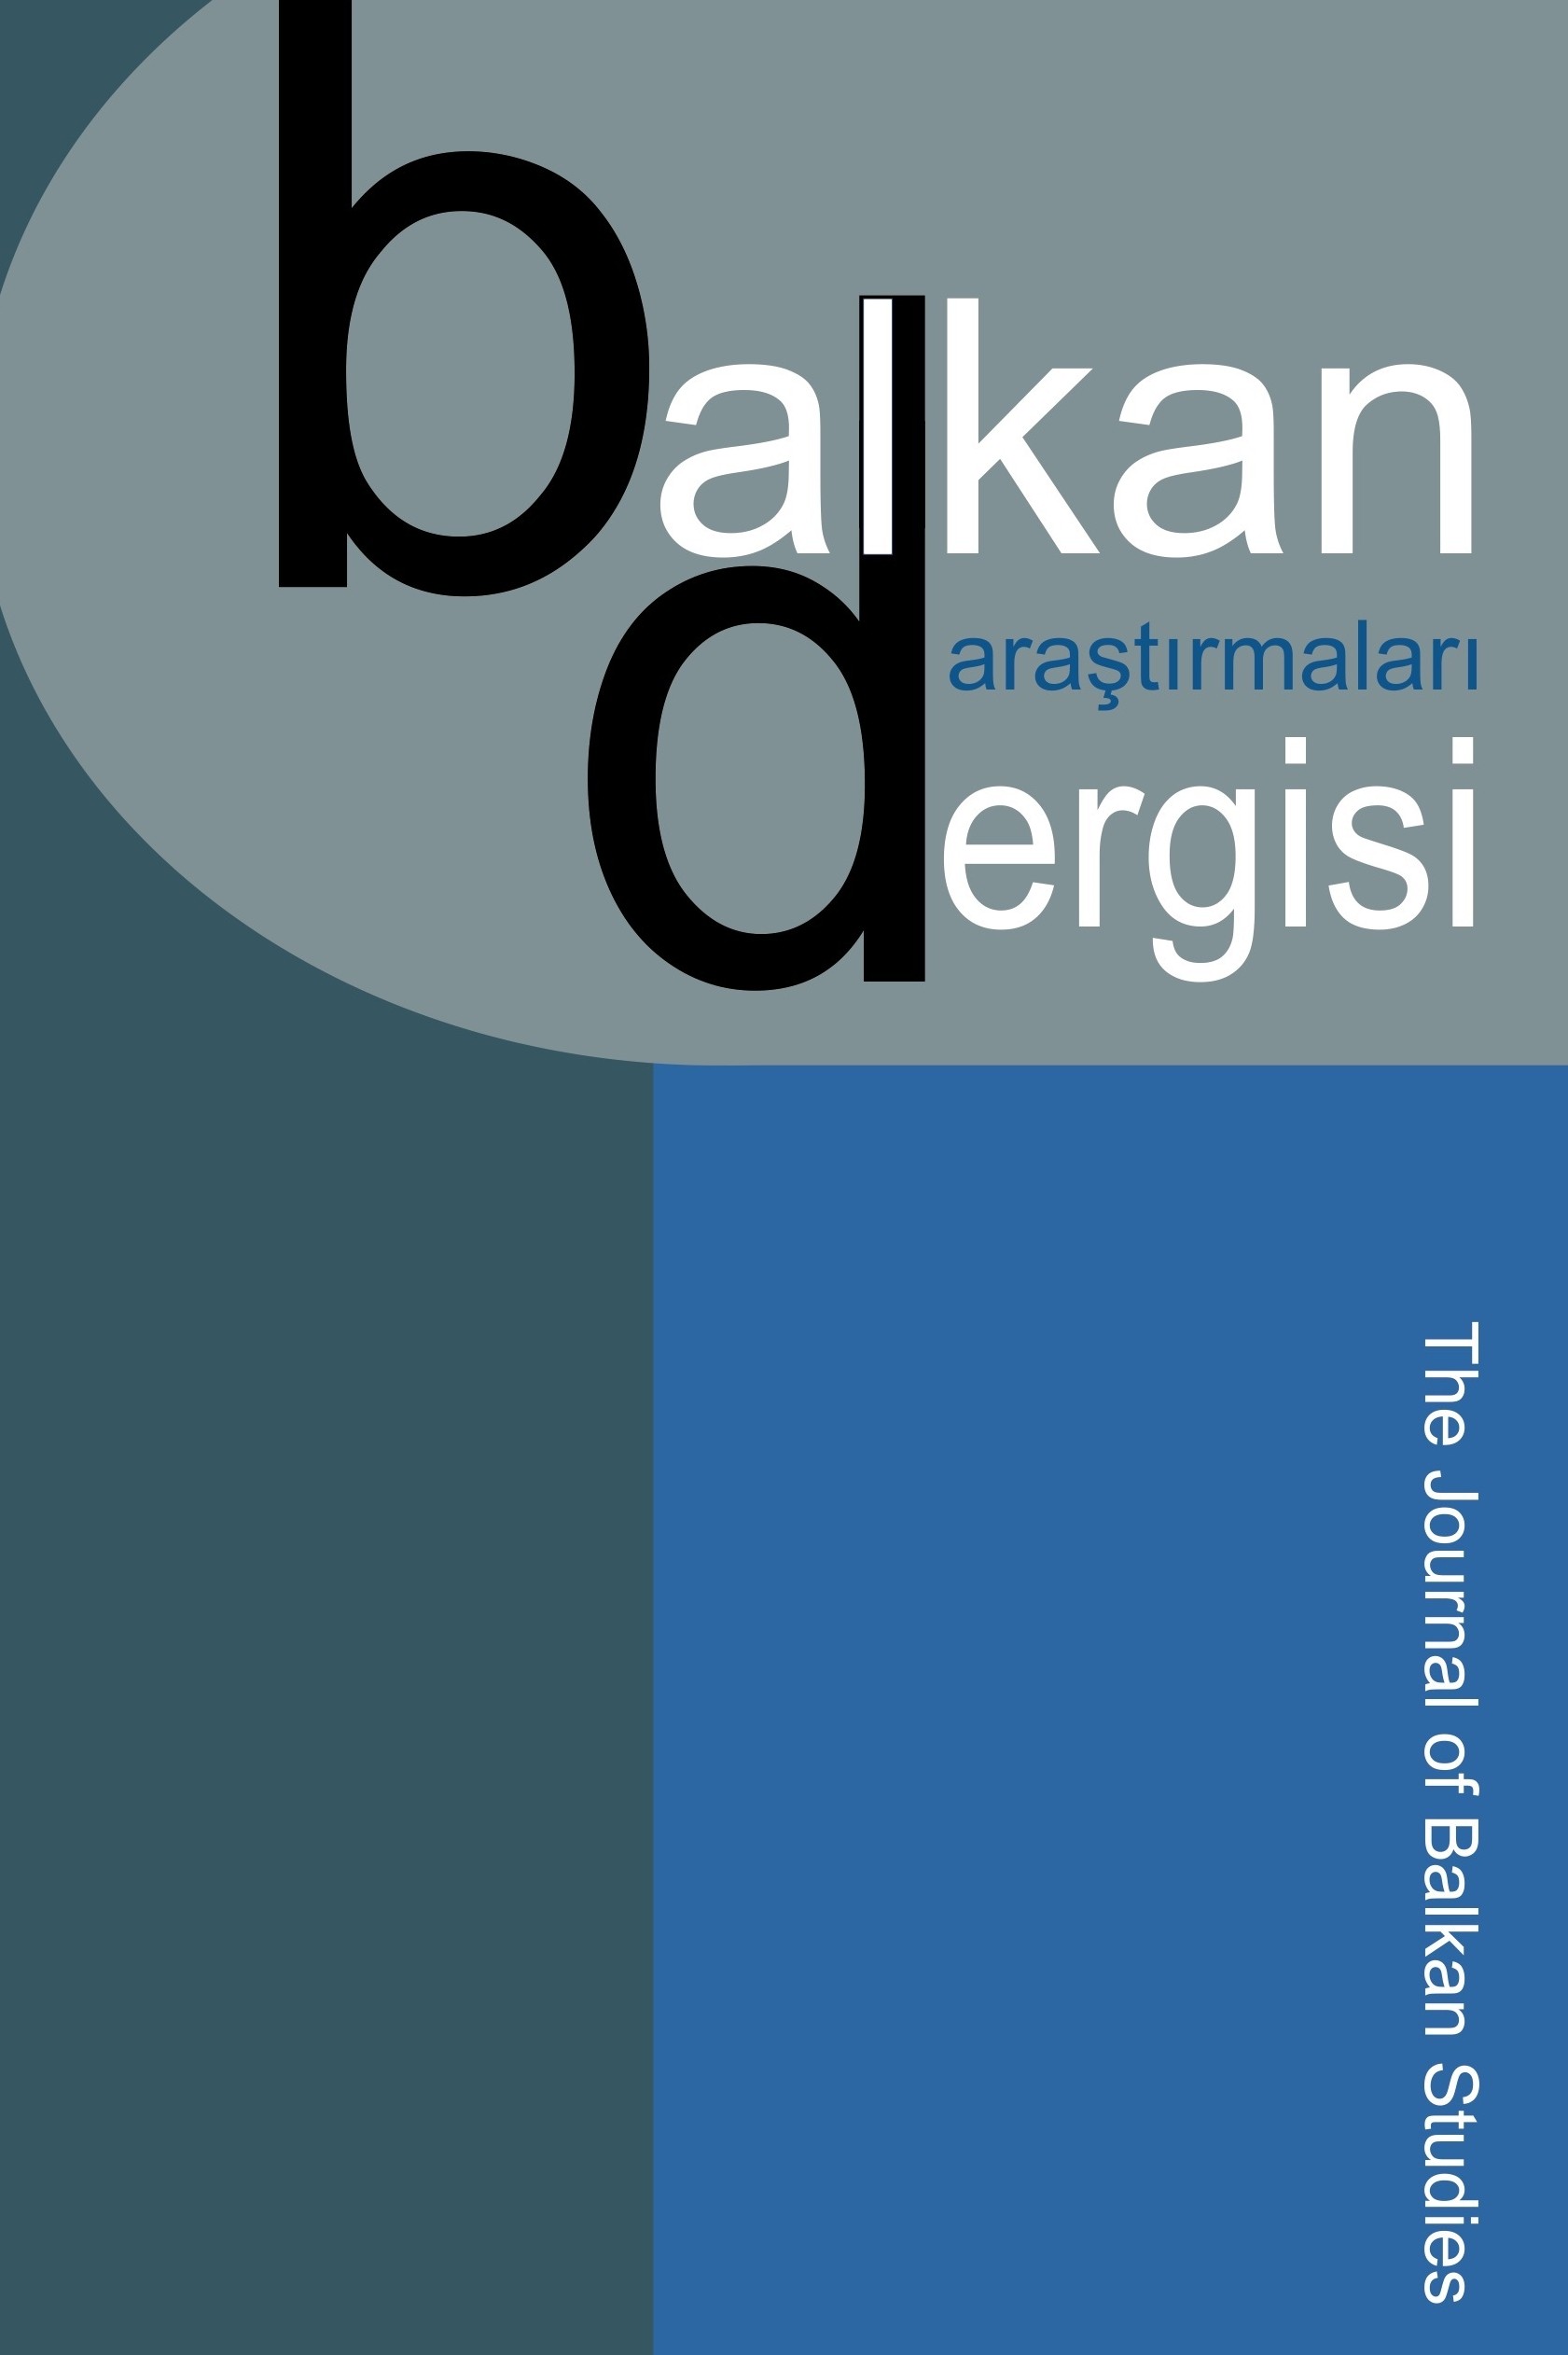 The Journal of Balkan Studies